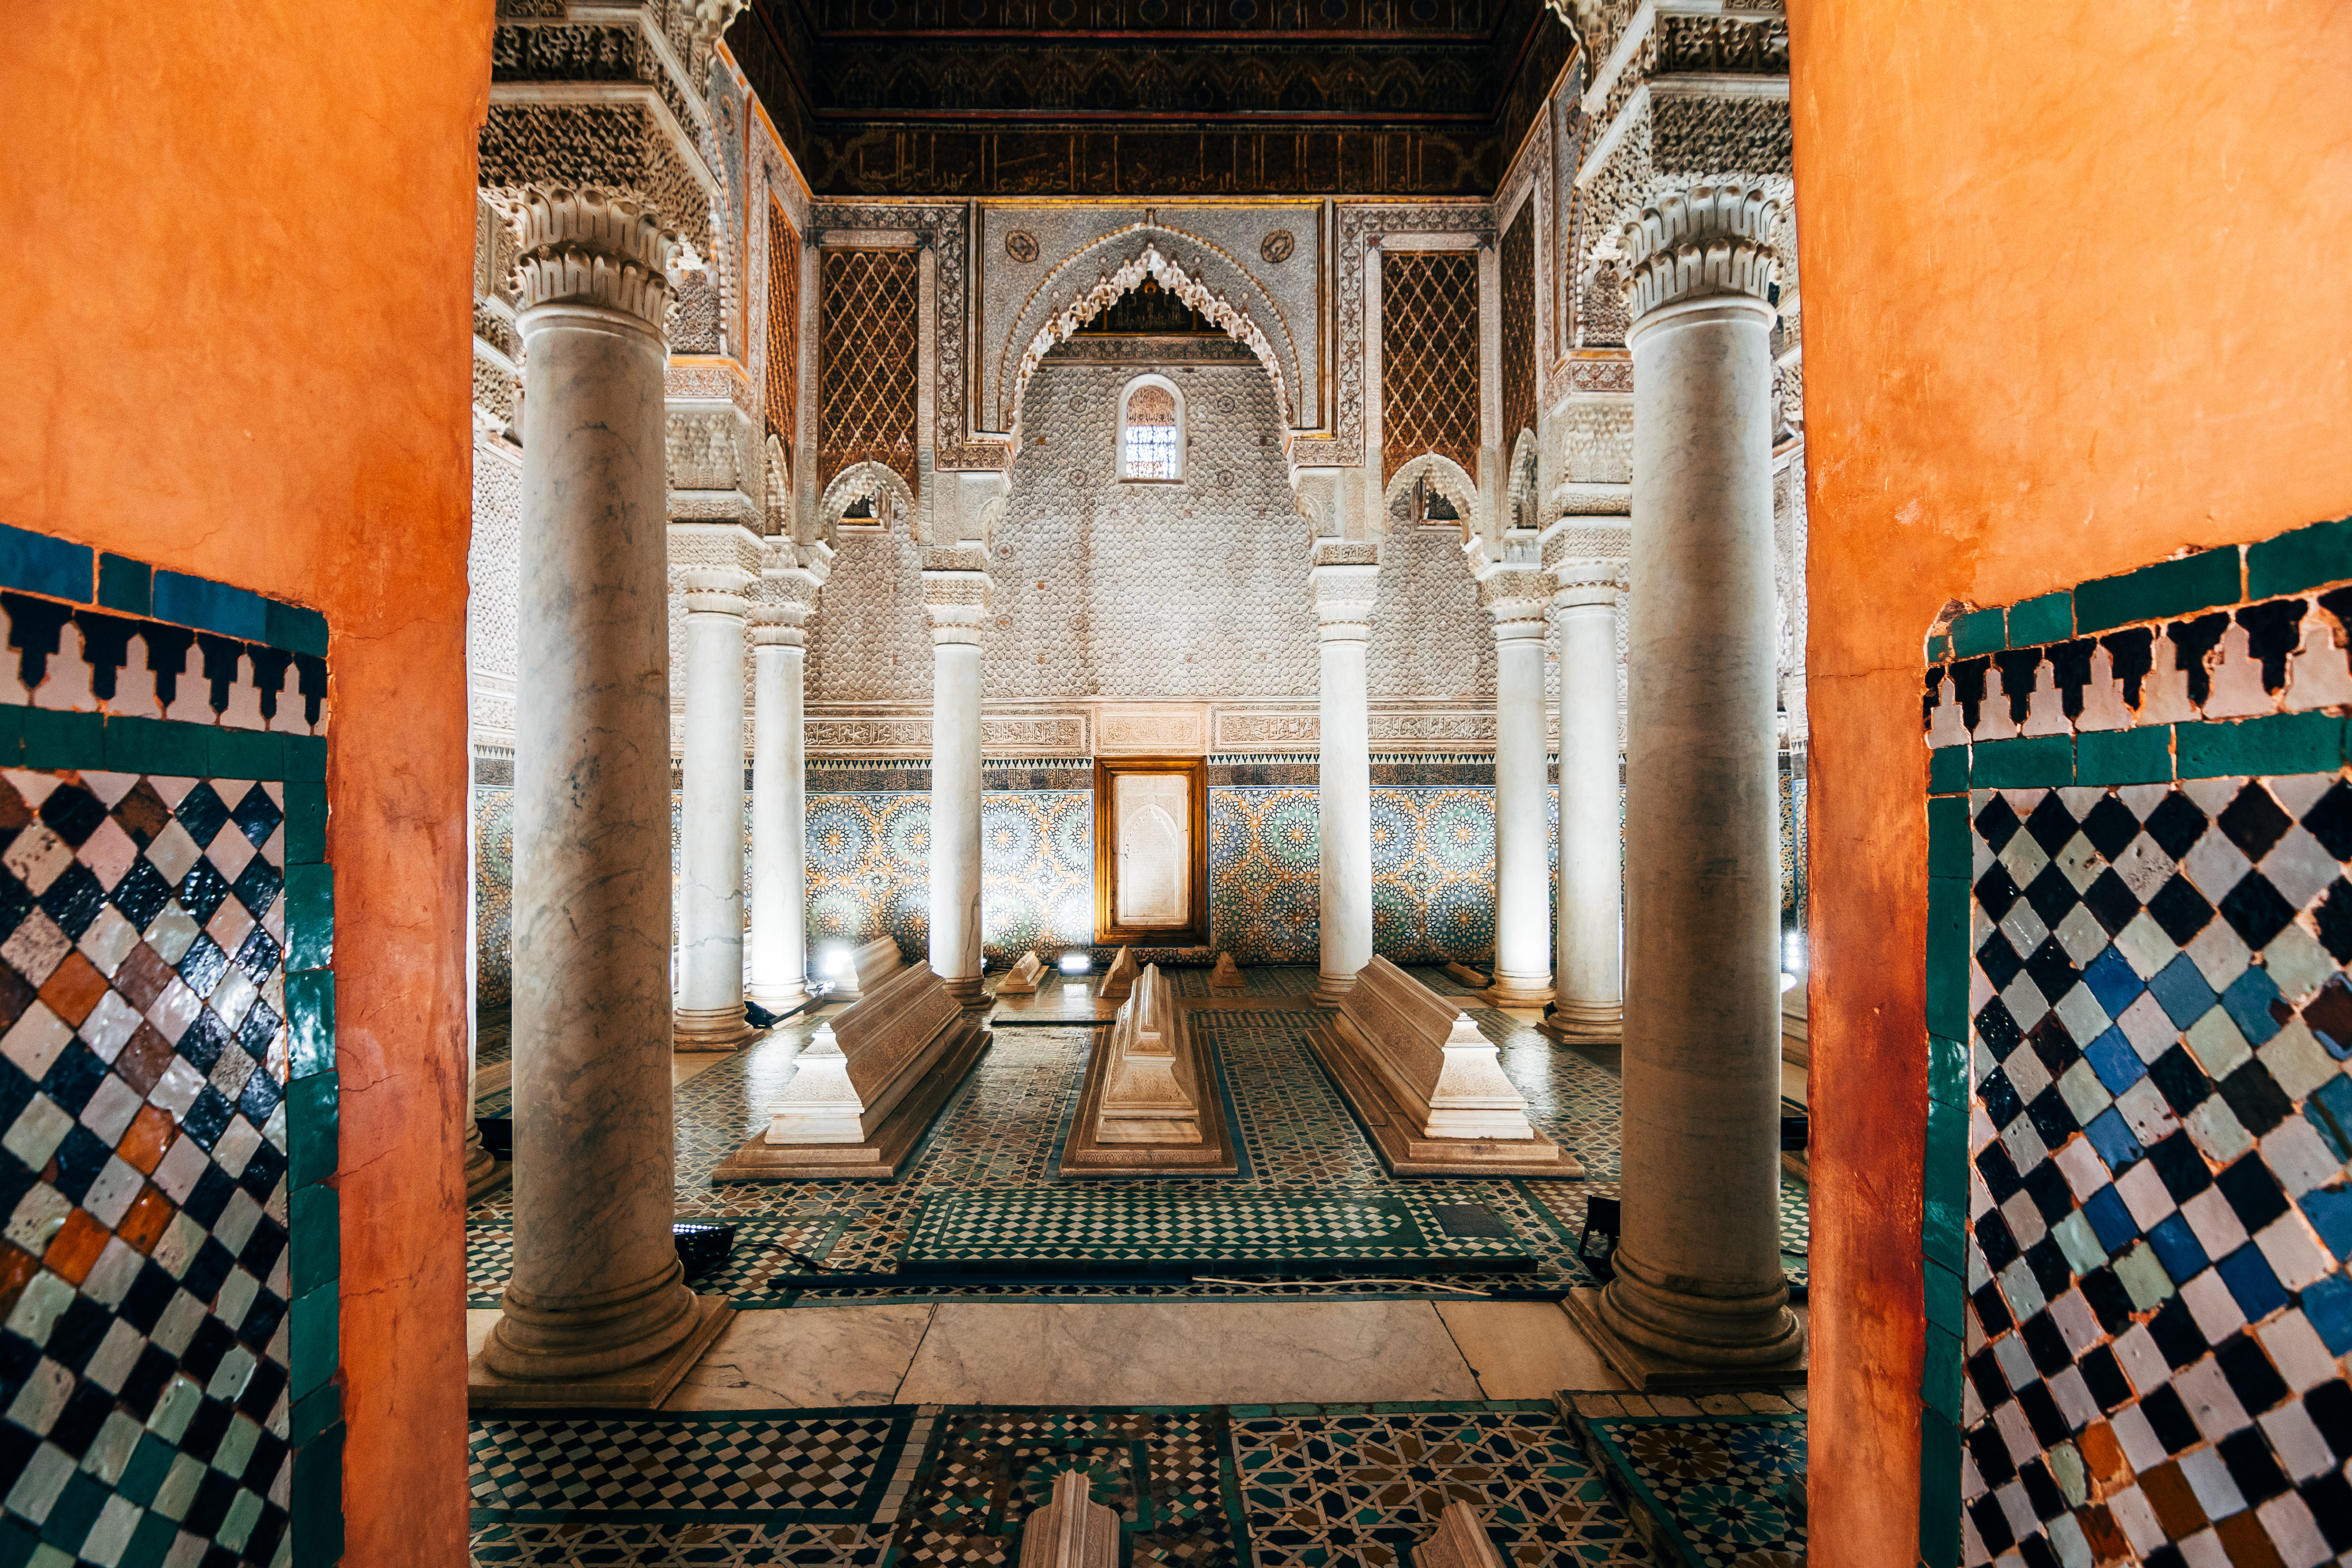 Tilework in Saadian Tombs in Marrakesh, Morocco